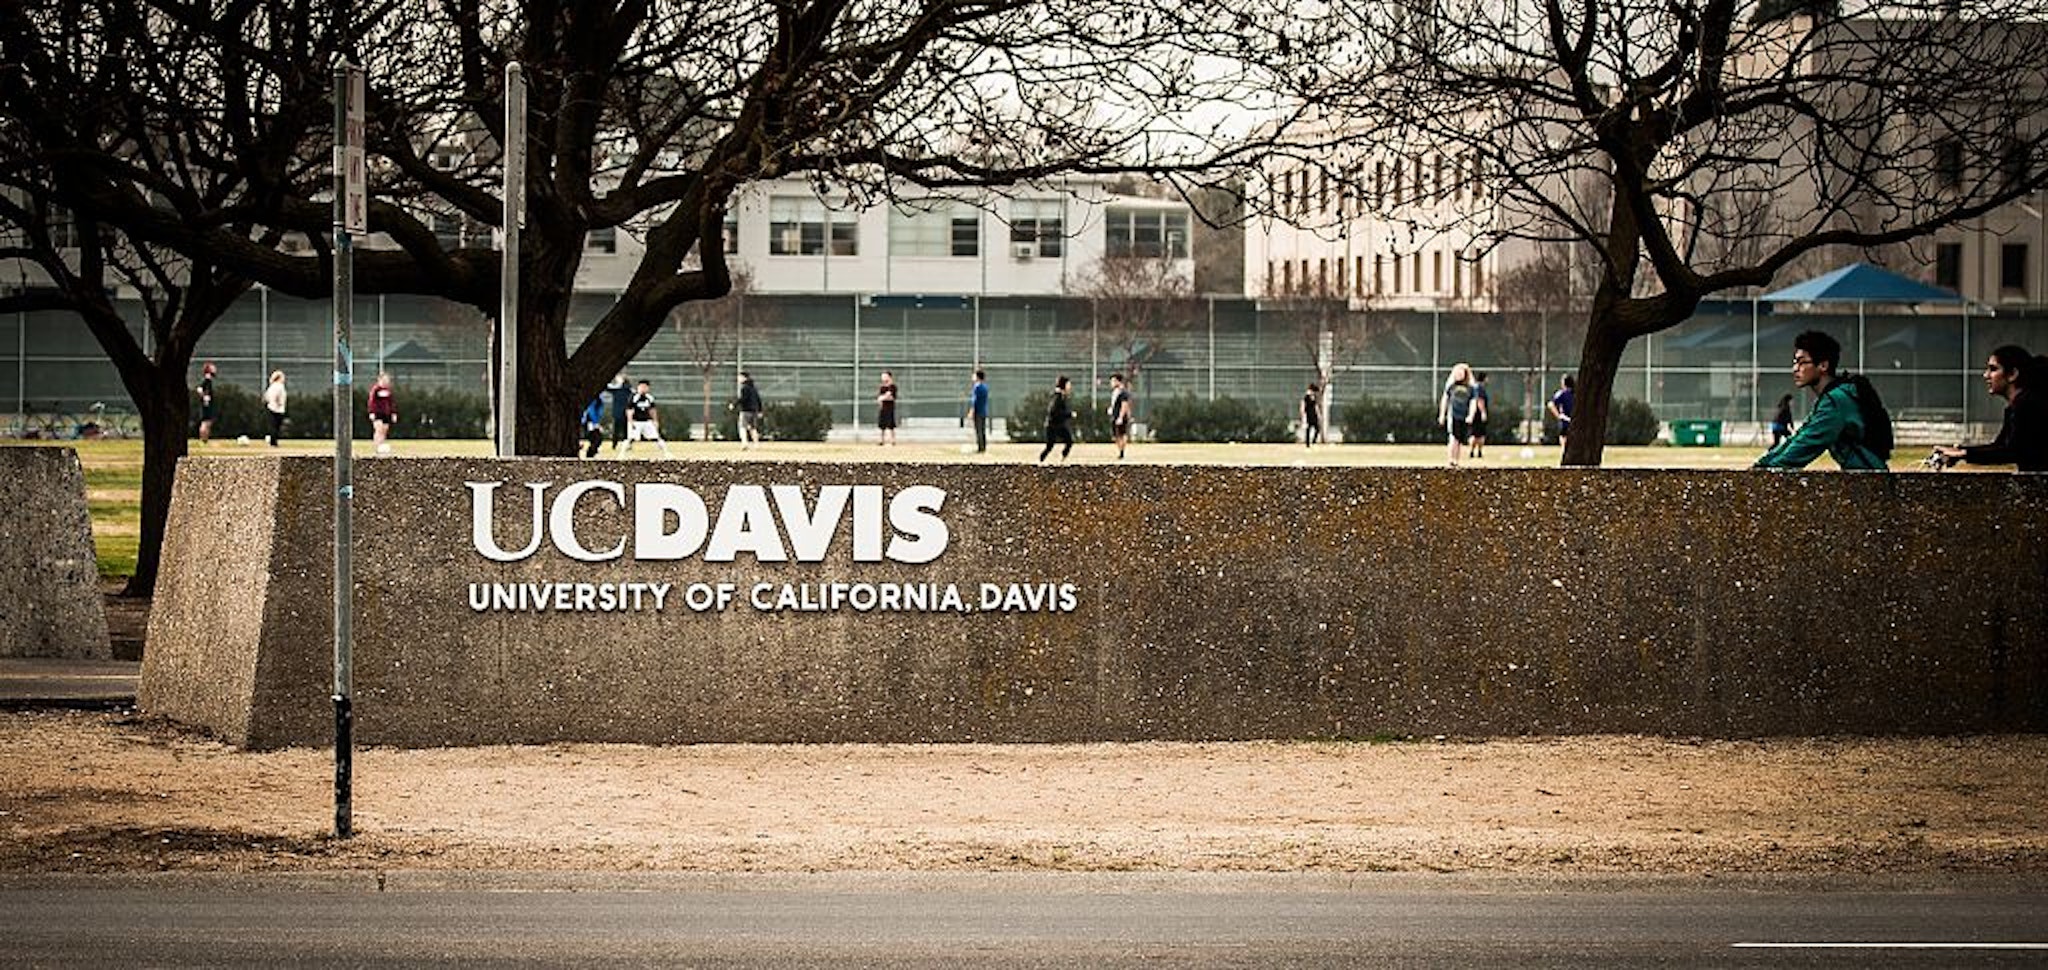 University of California at Davis. Davis, California. Taken February 2, 2015.